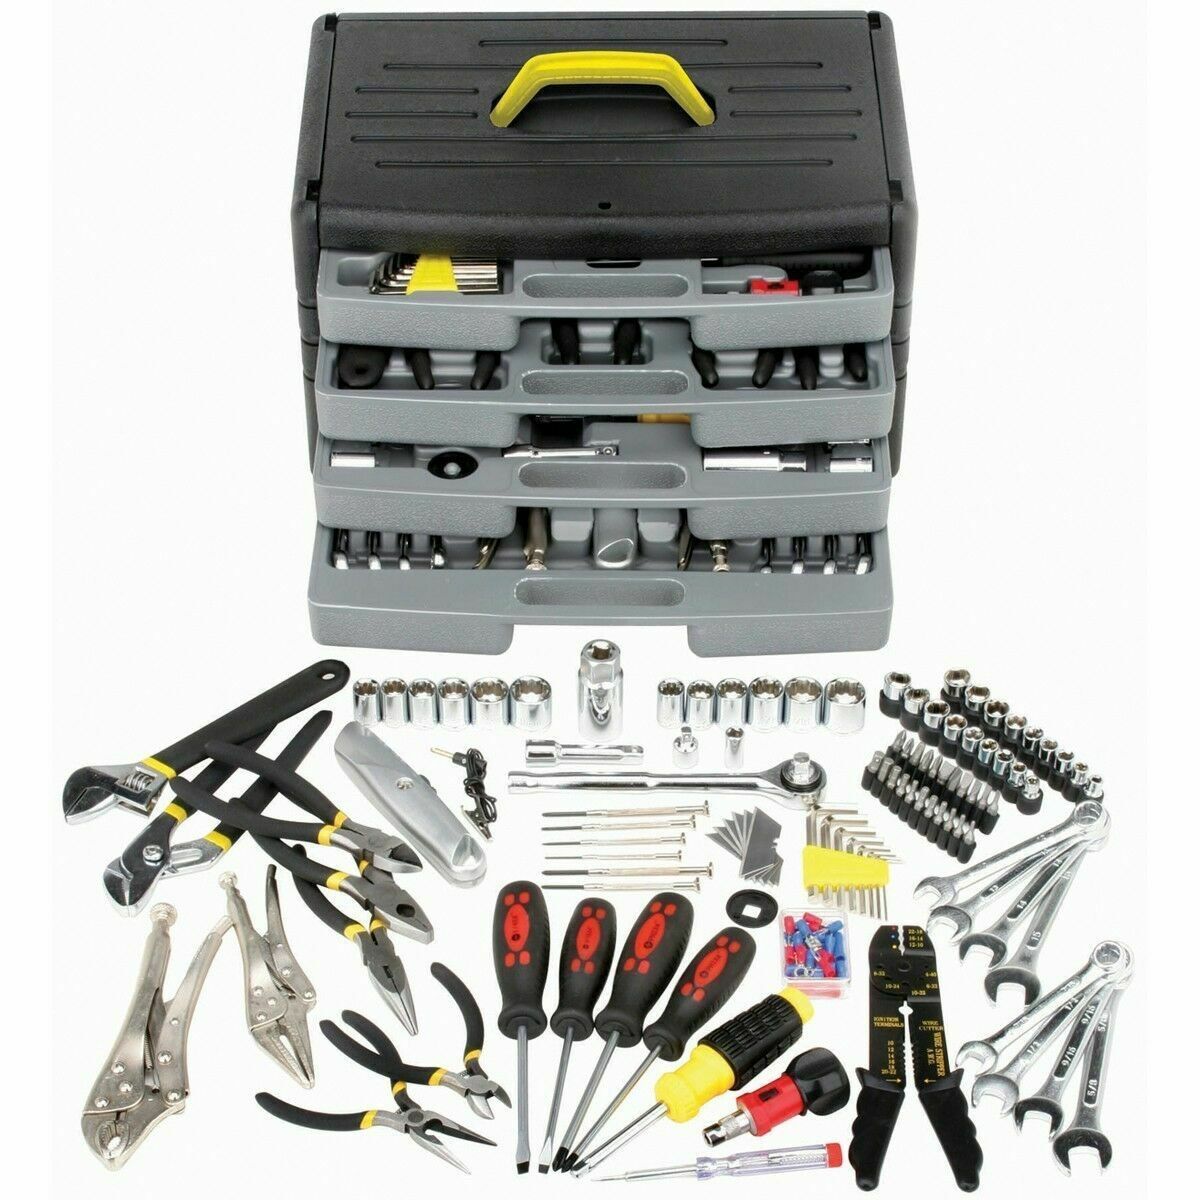 105 Piece Tool Kit w/4 Four Drawer Case - Home/Shop/Garage/Car LIFETIME WARRANTY